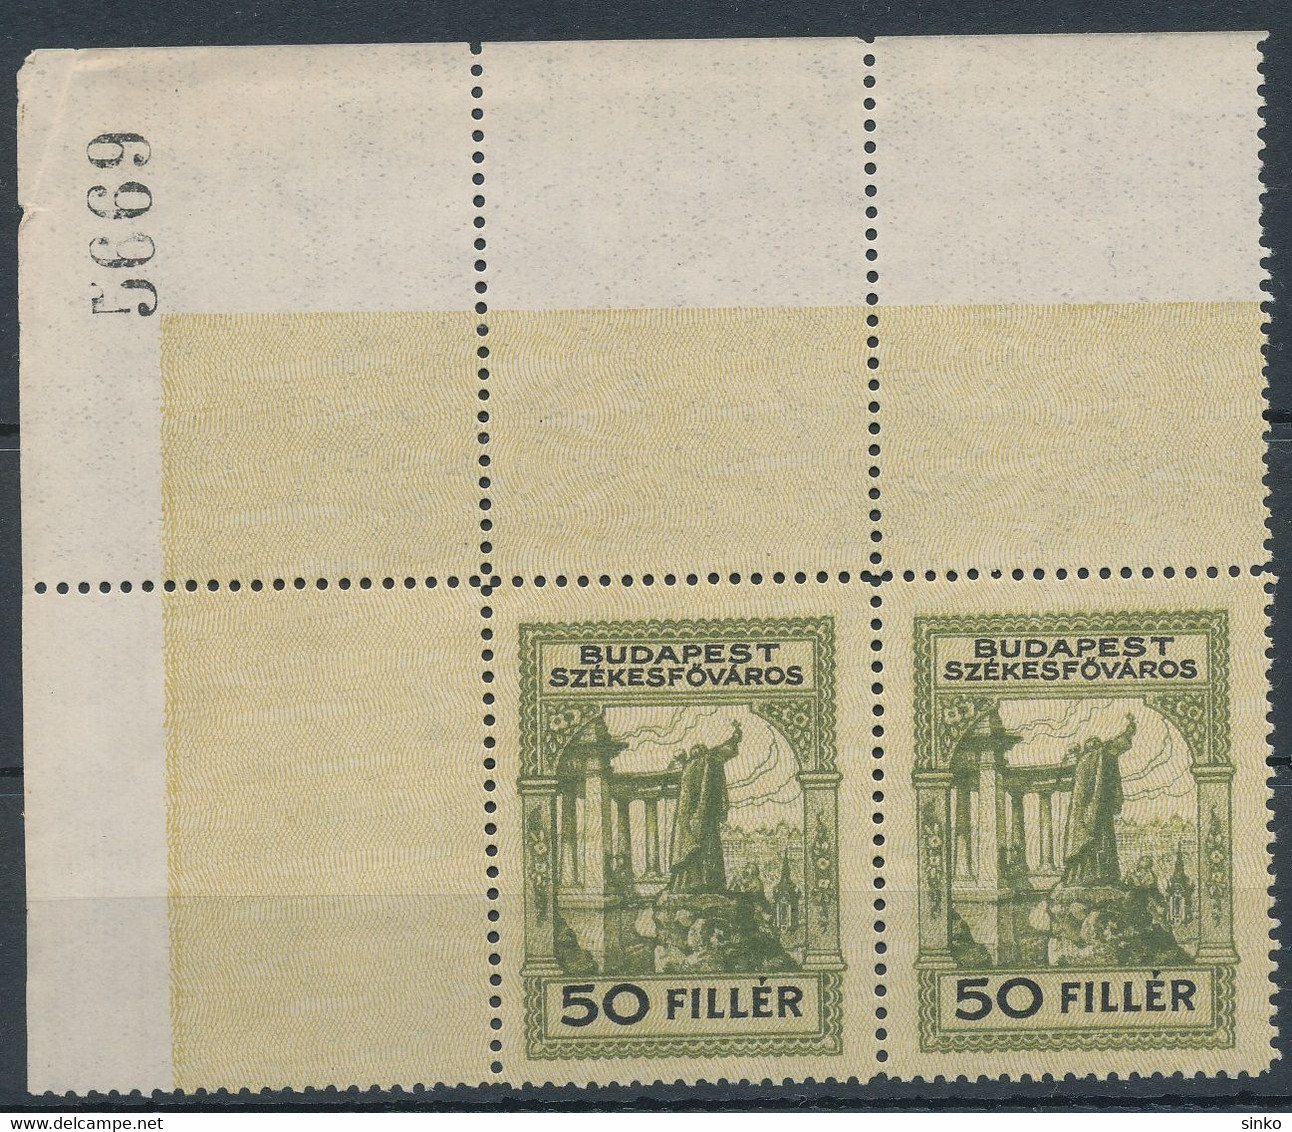 1927. Locally Issued Document Stamp - Herdenkingsblaadjes